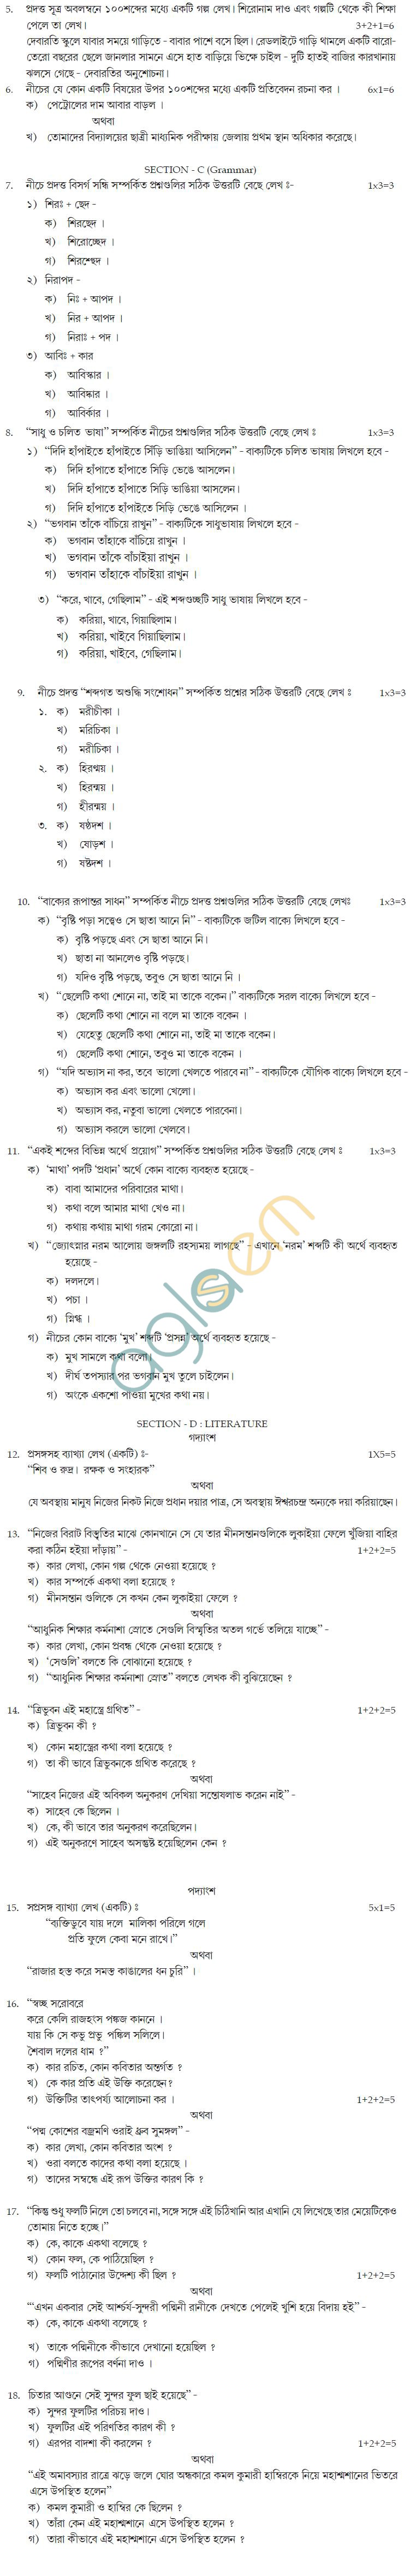 CBSE Class X Sample Papers 2013 (Second Term) Bengali